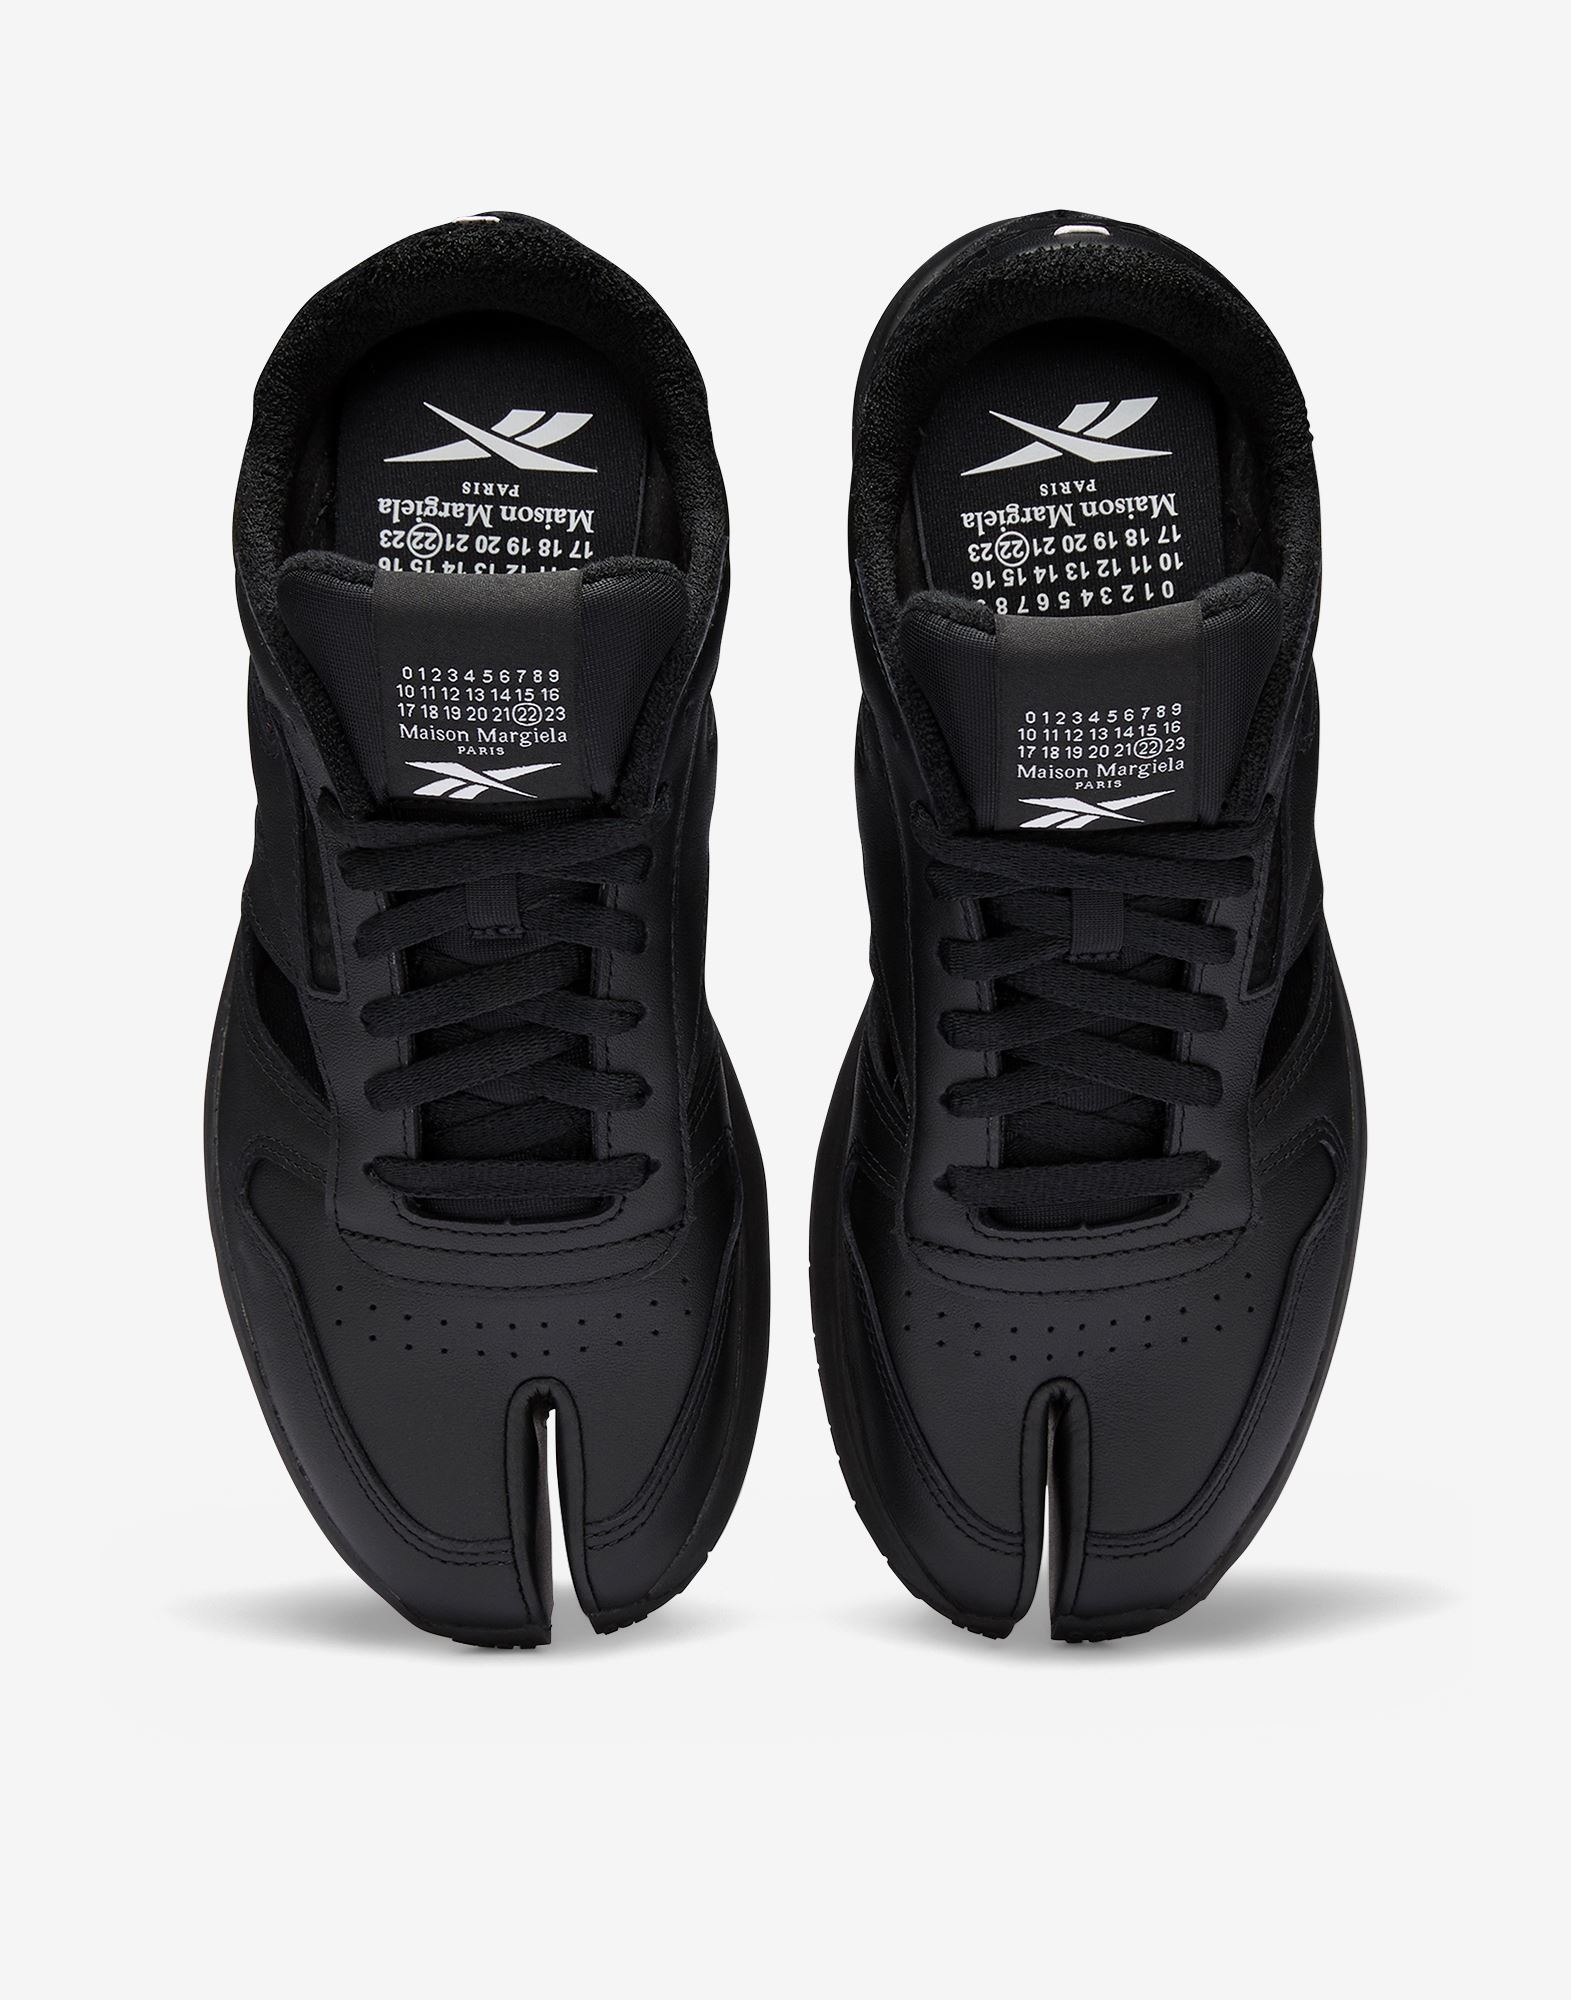 MM x Reebok classic leather Tabi low-top sneakers - 6